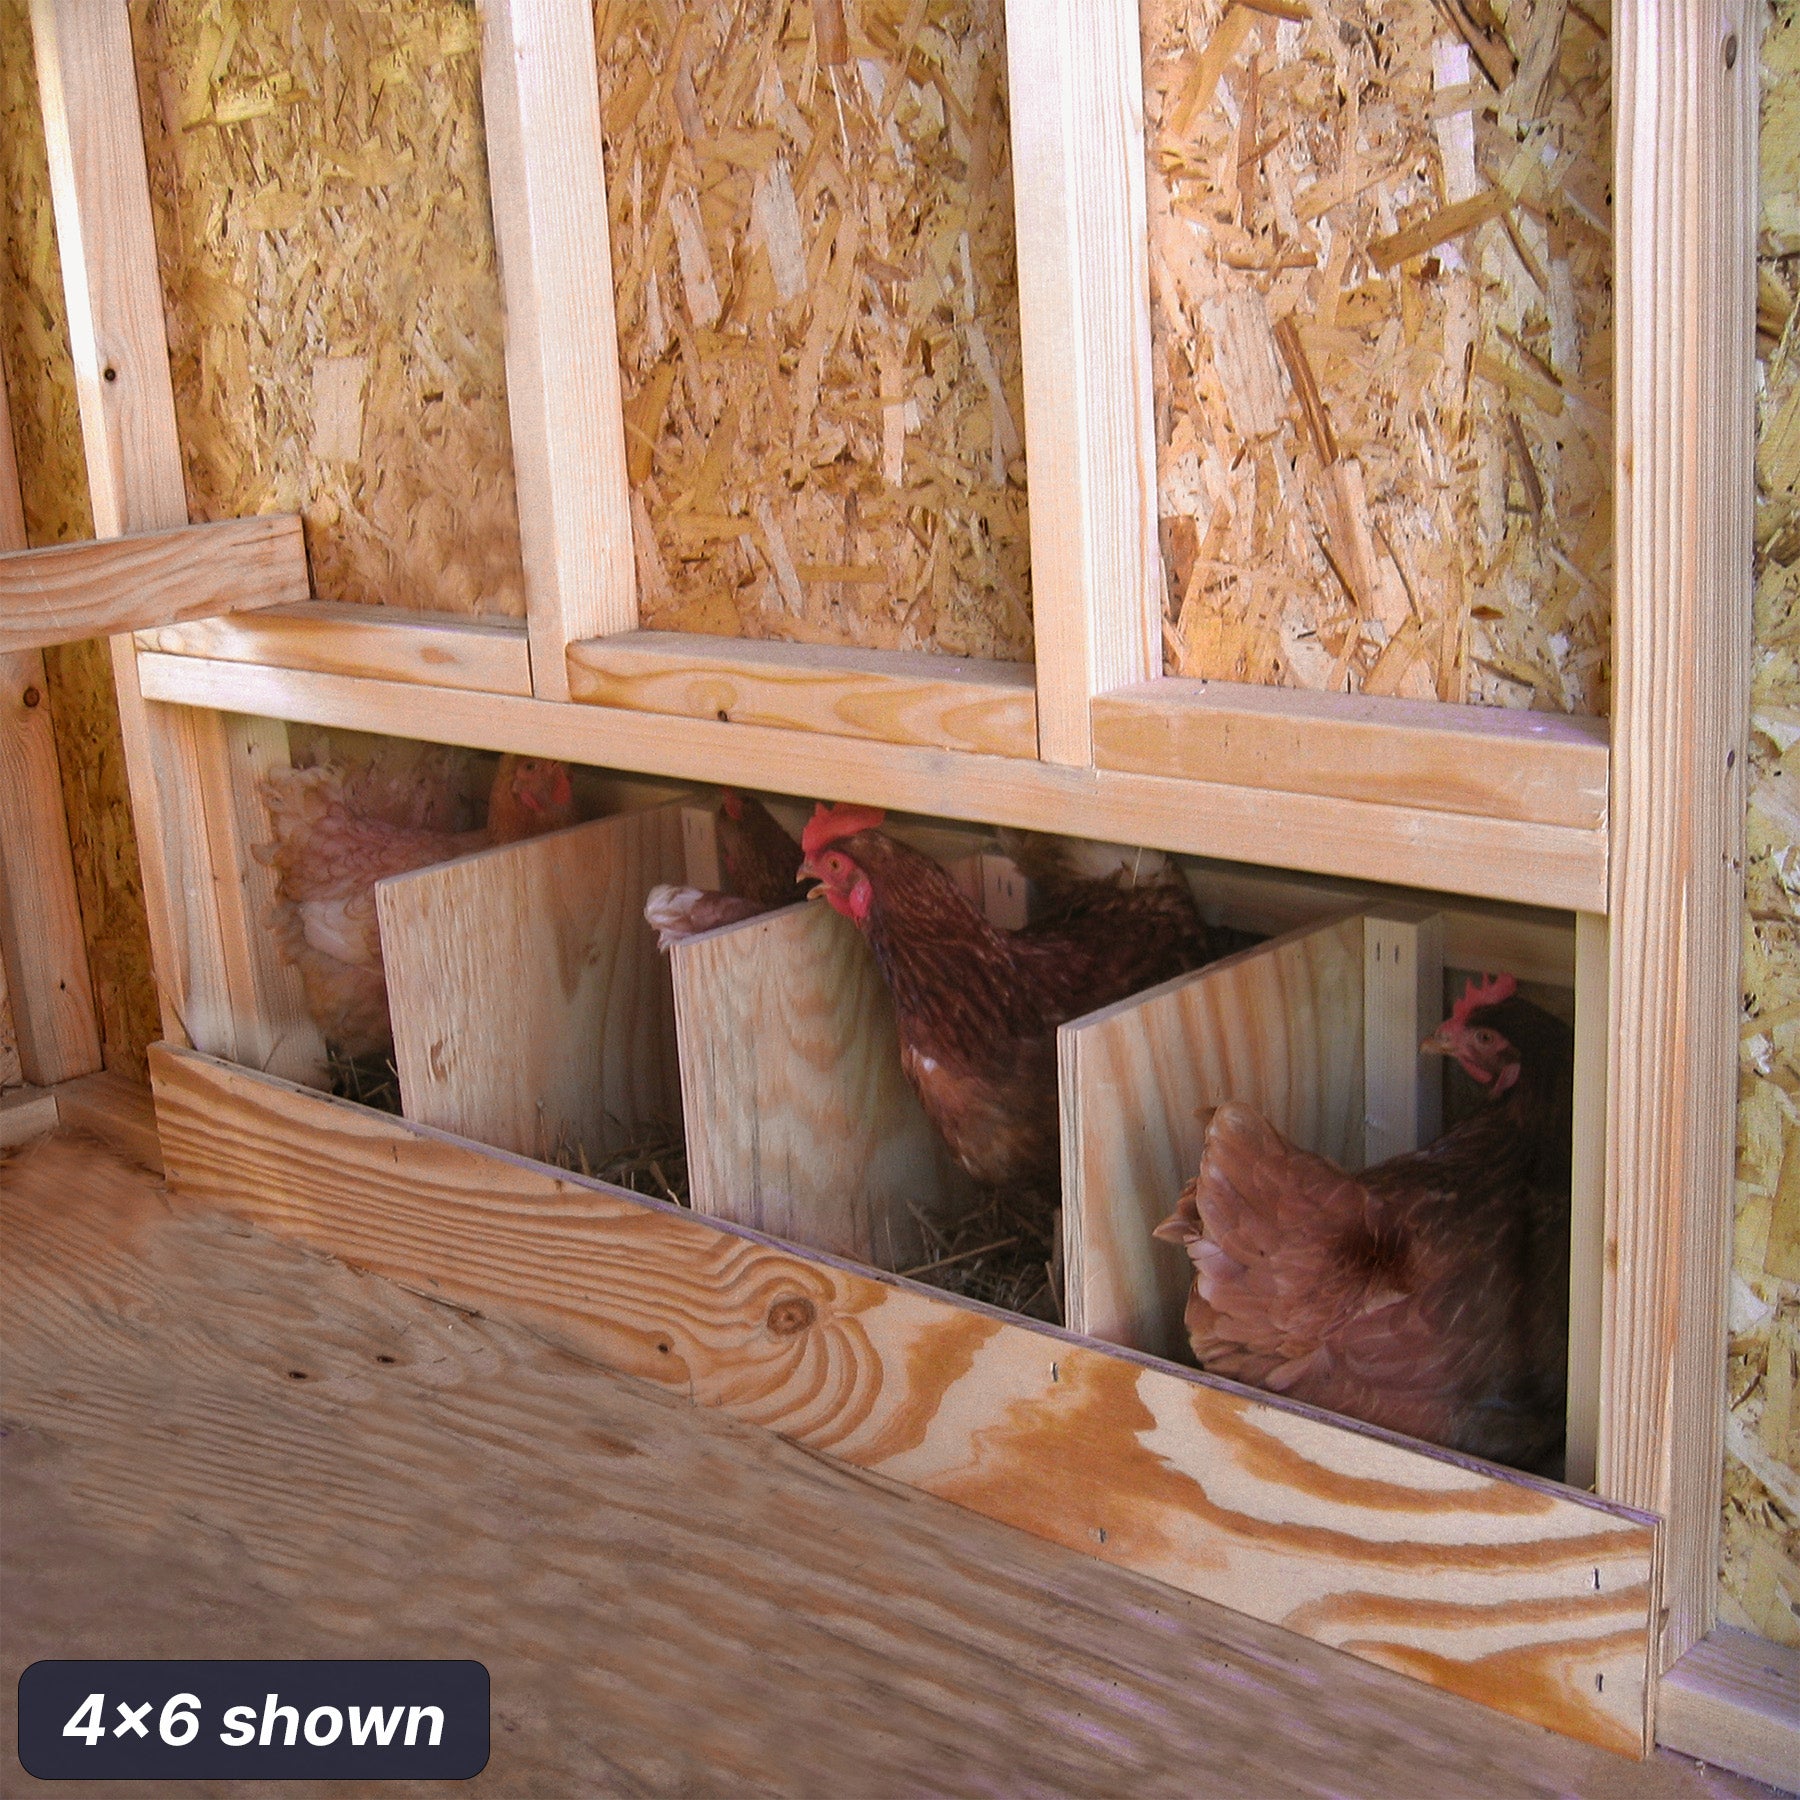 4x6 gambrel barn chicken coop interior nesting boxes